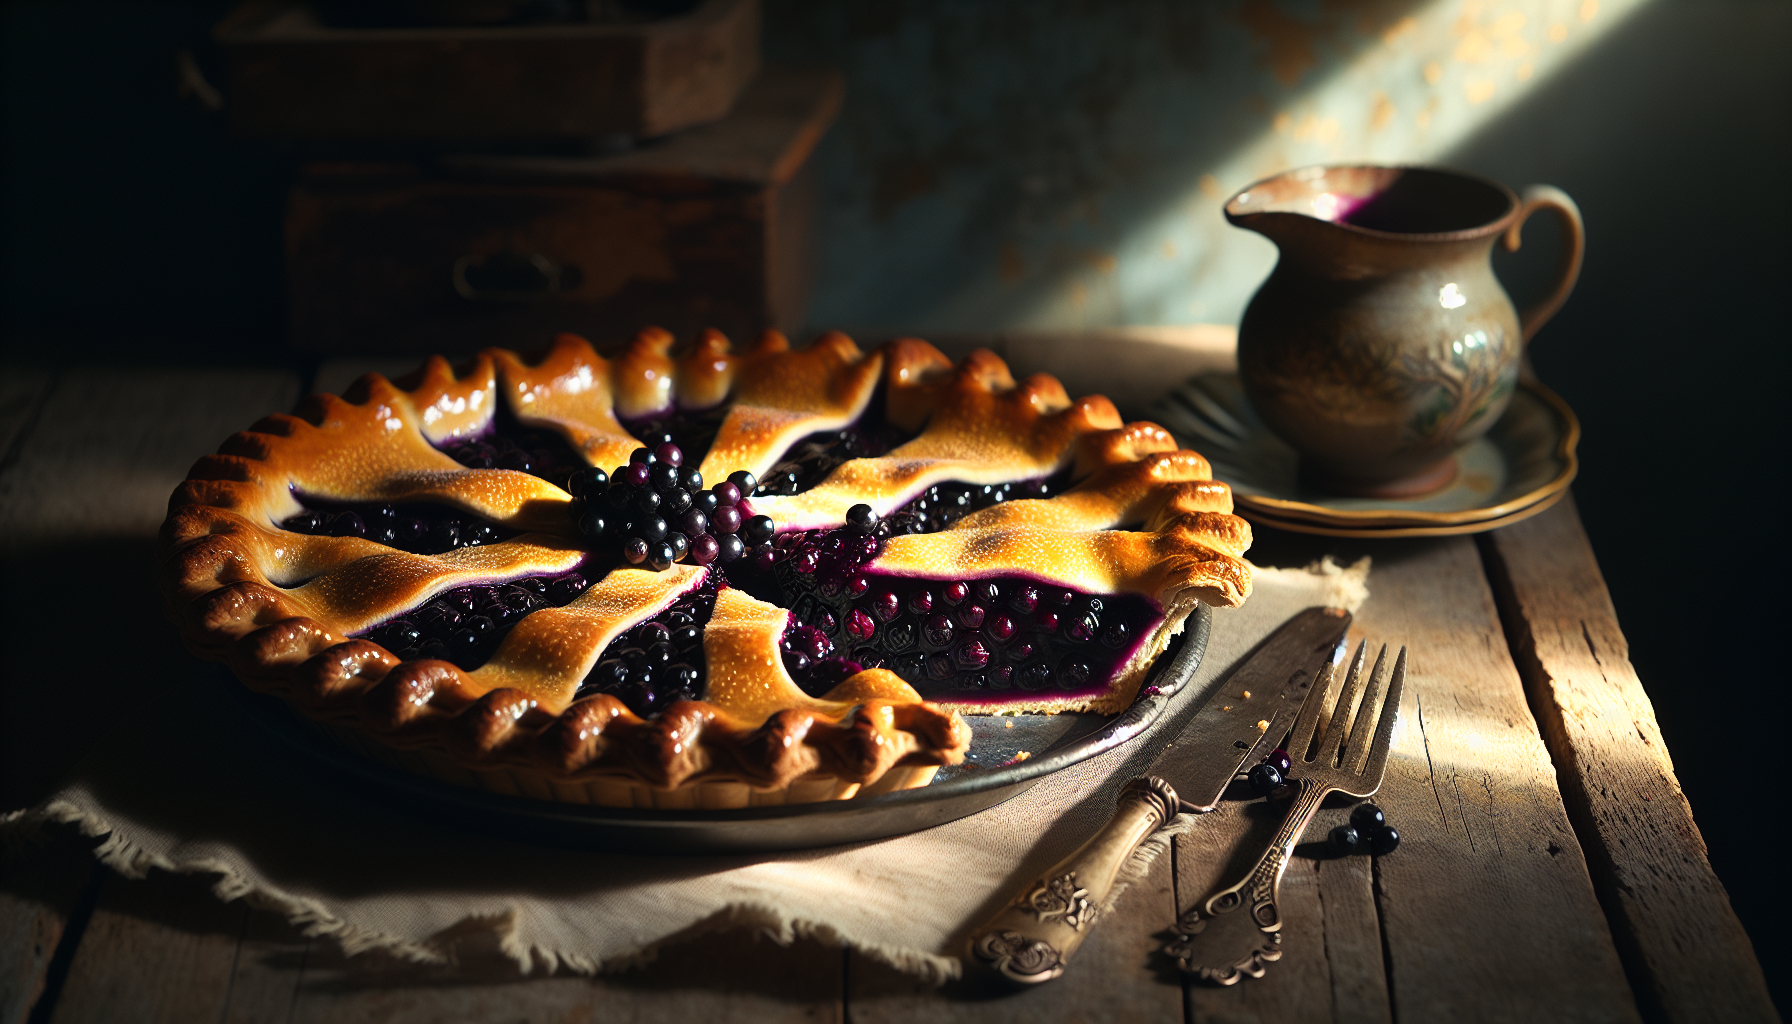 elderberry pie